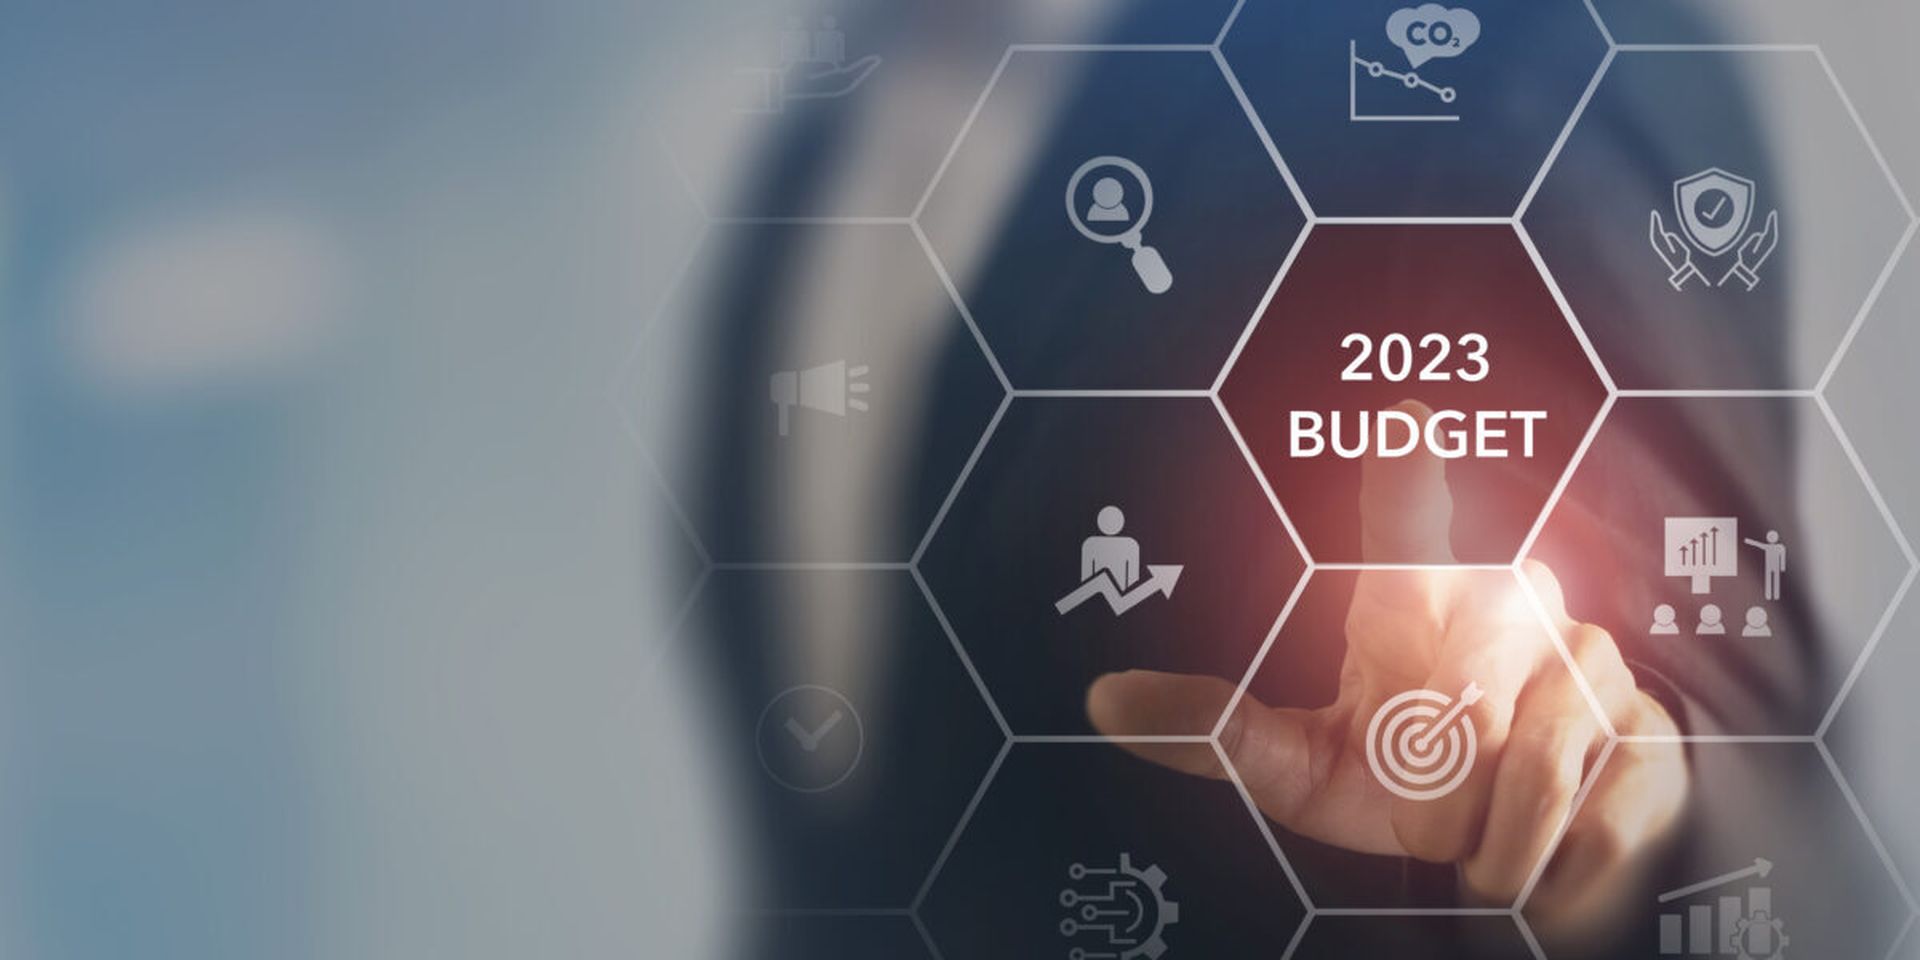 2023 Budget planning and management concept. (Image credit: Parradee Kietsirikul via Getty)